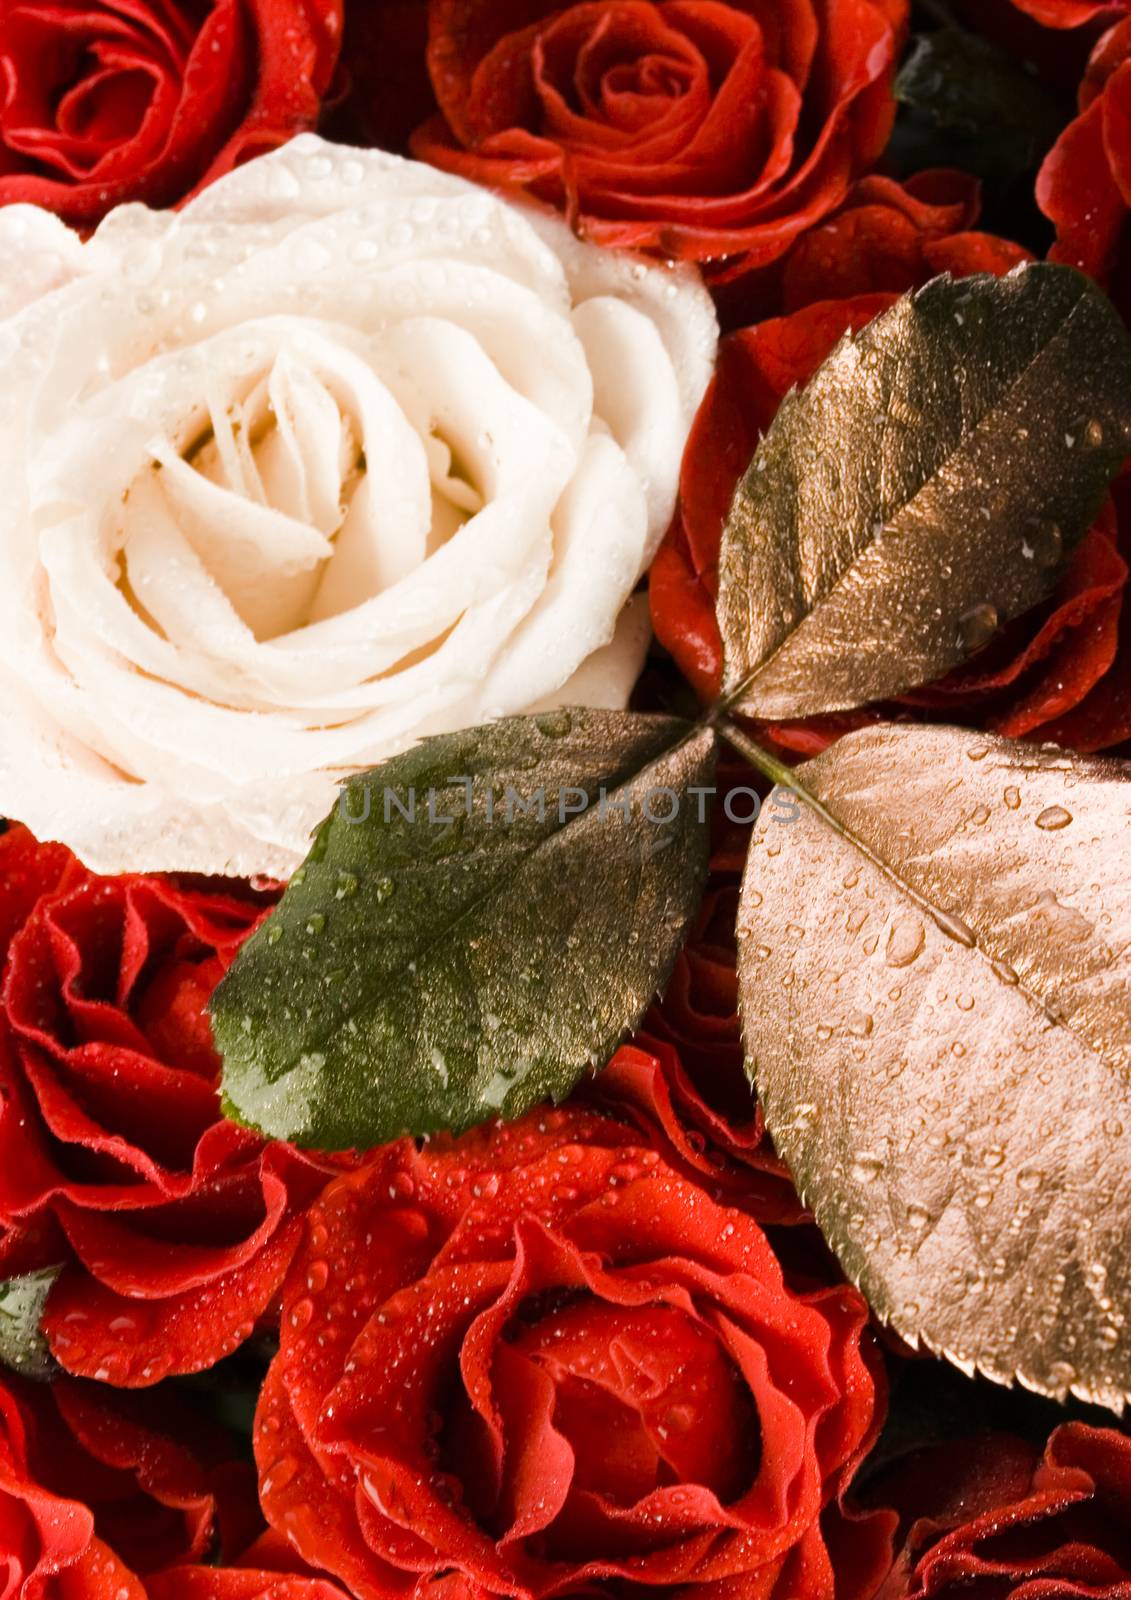 Romantic roses, wonderful springtime vivid theme by JanPietruszka